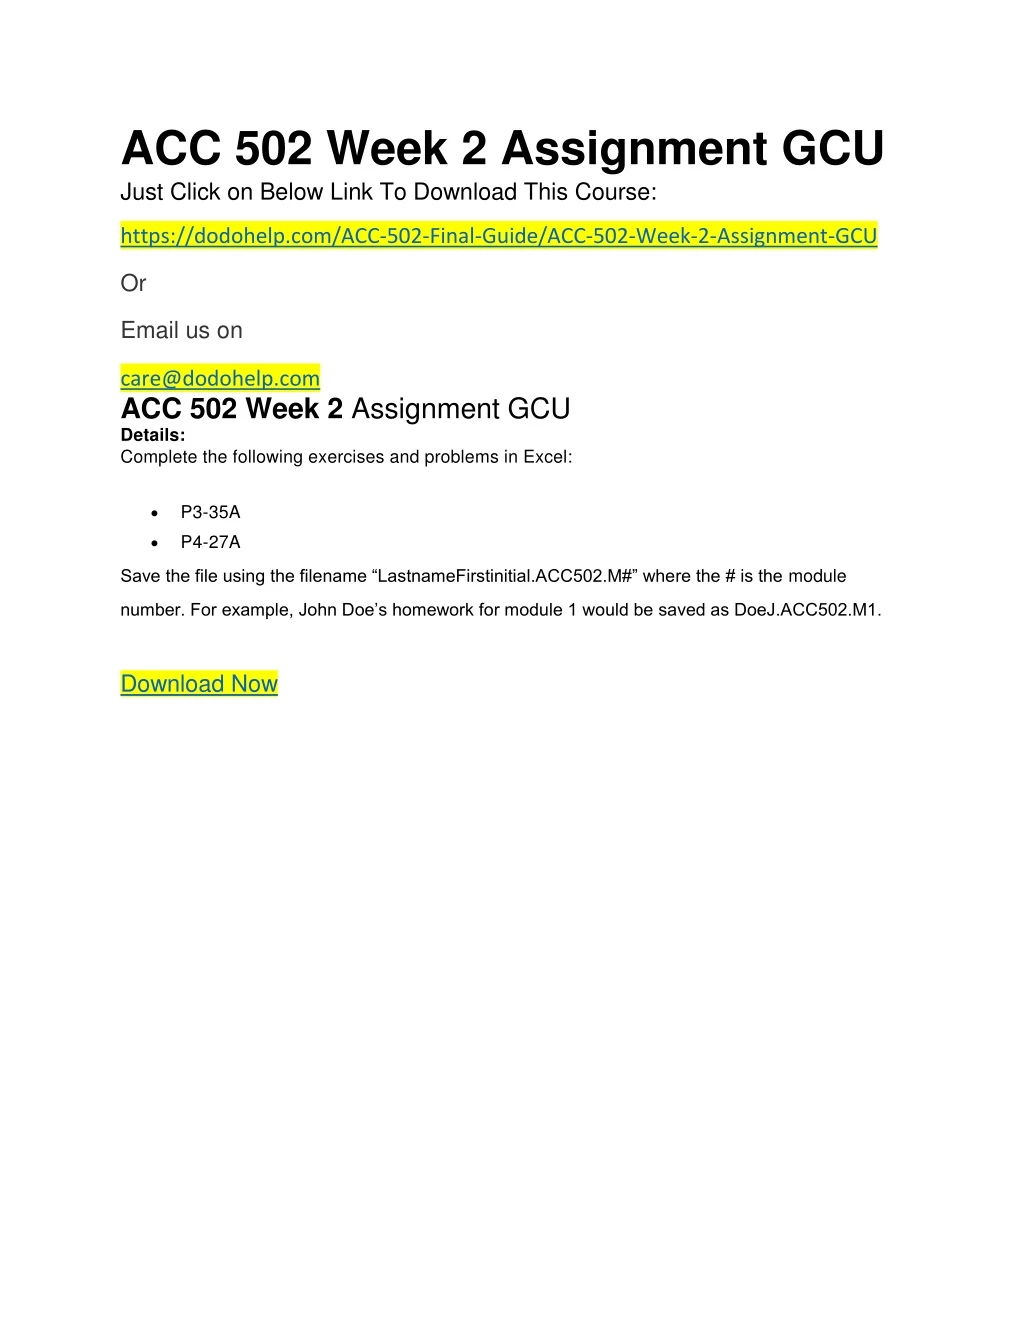 acc 502 week 2 assignment gcu just click on below